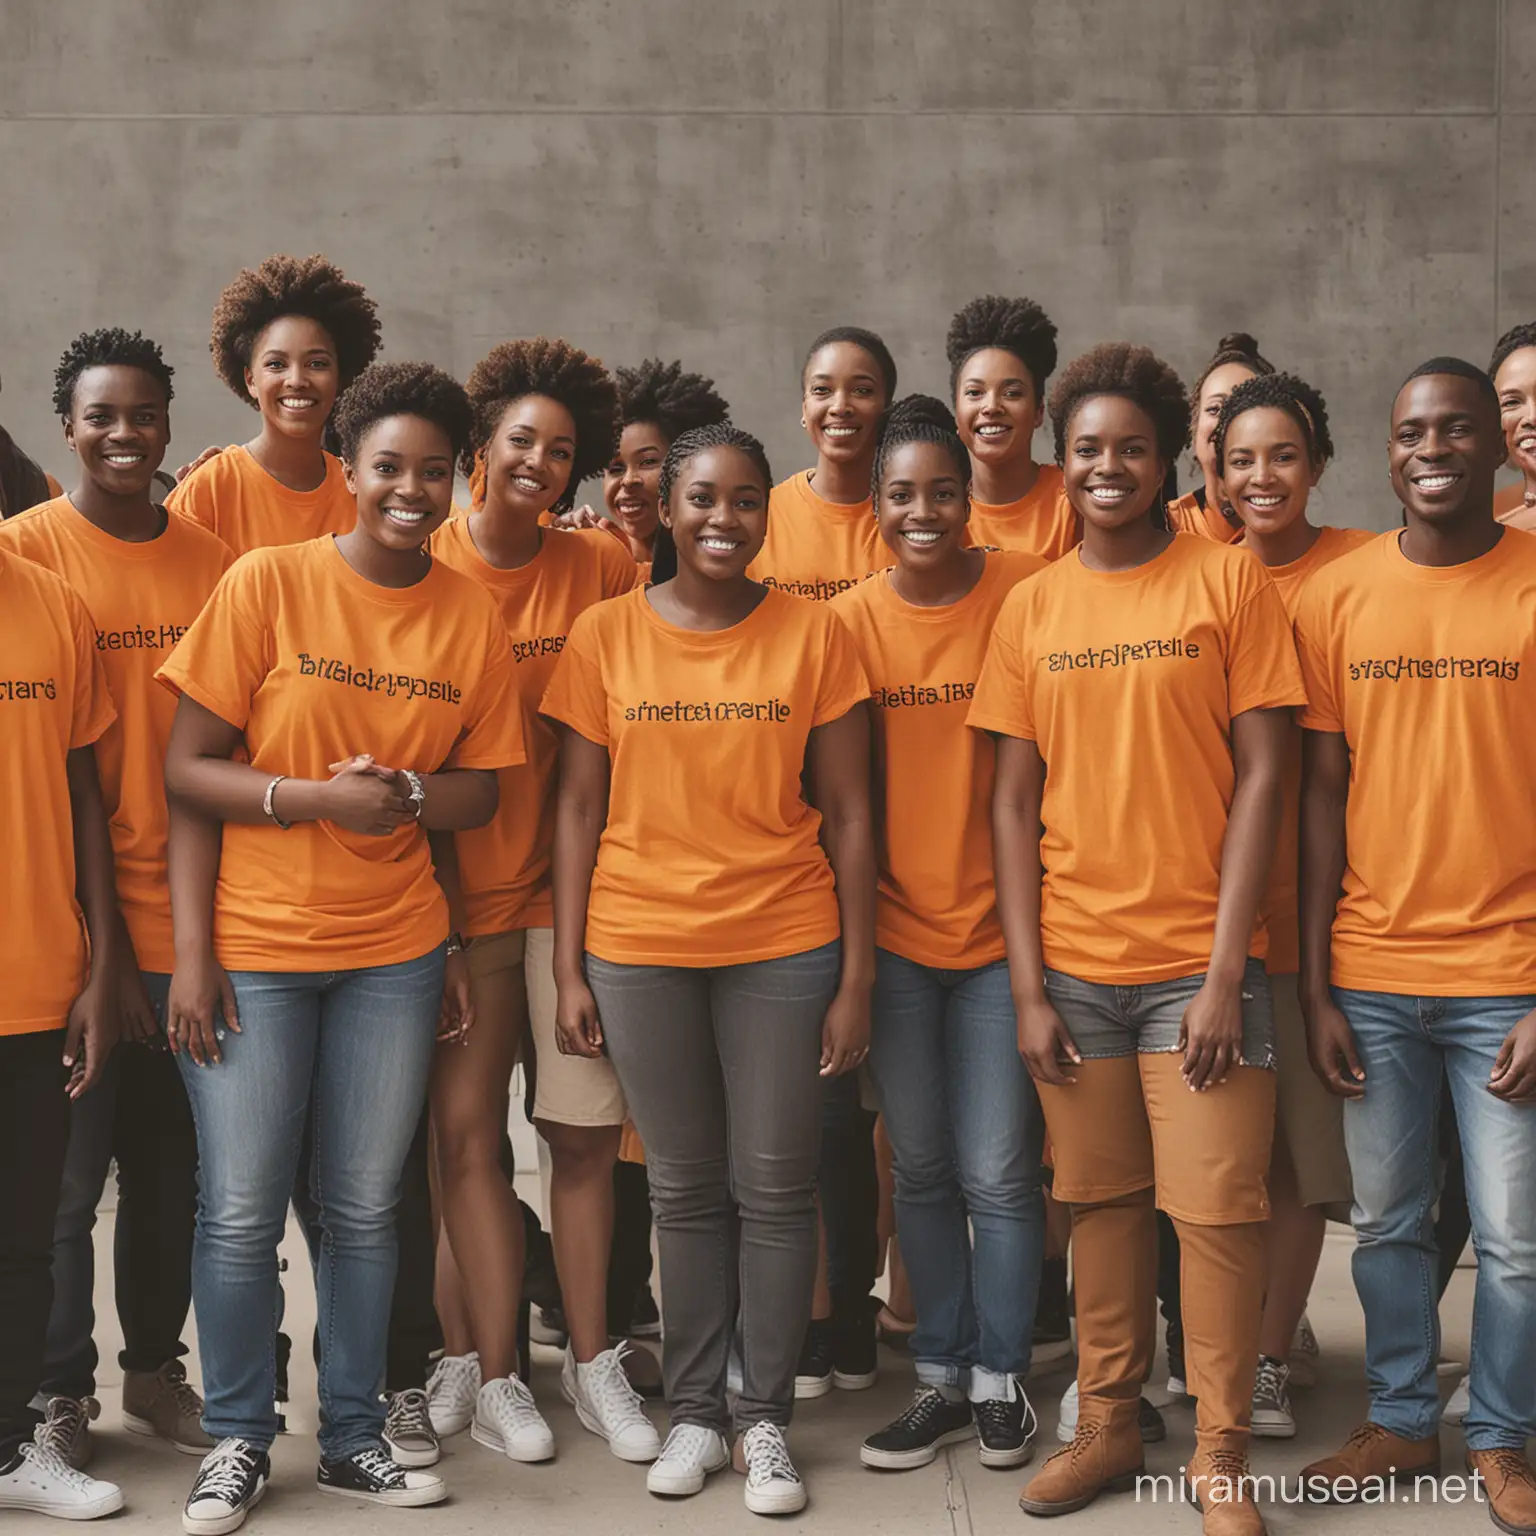 black people standing smiling with orange shirts